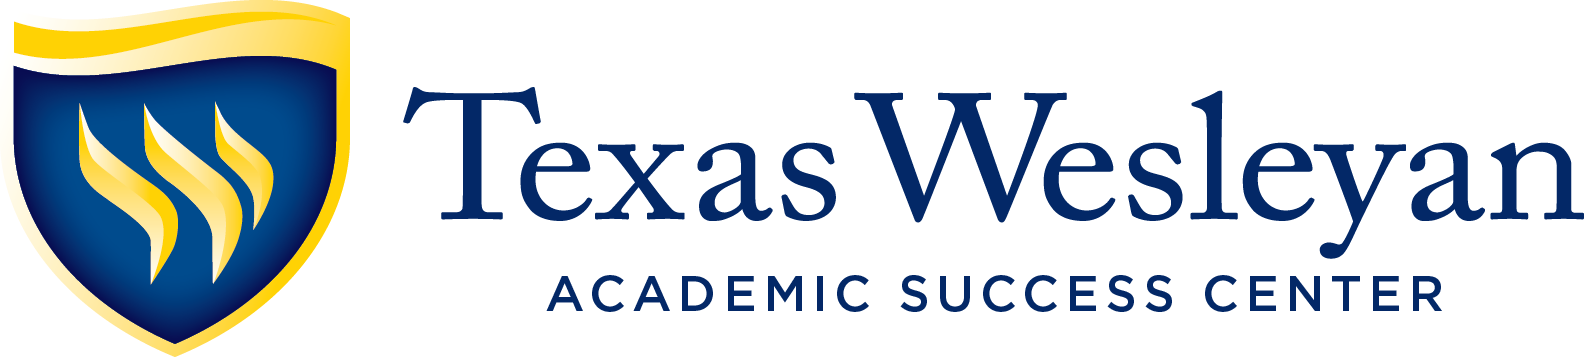 Texas Wesleyan shield logo with Academic Success Center department name